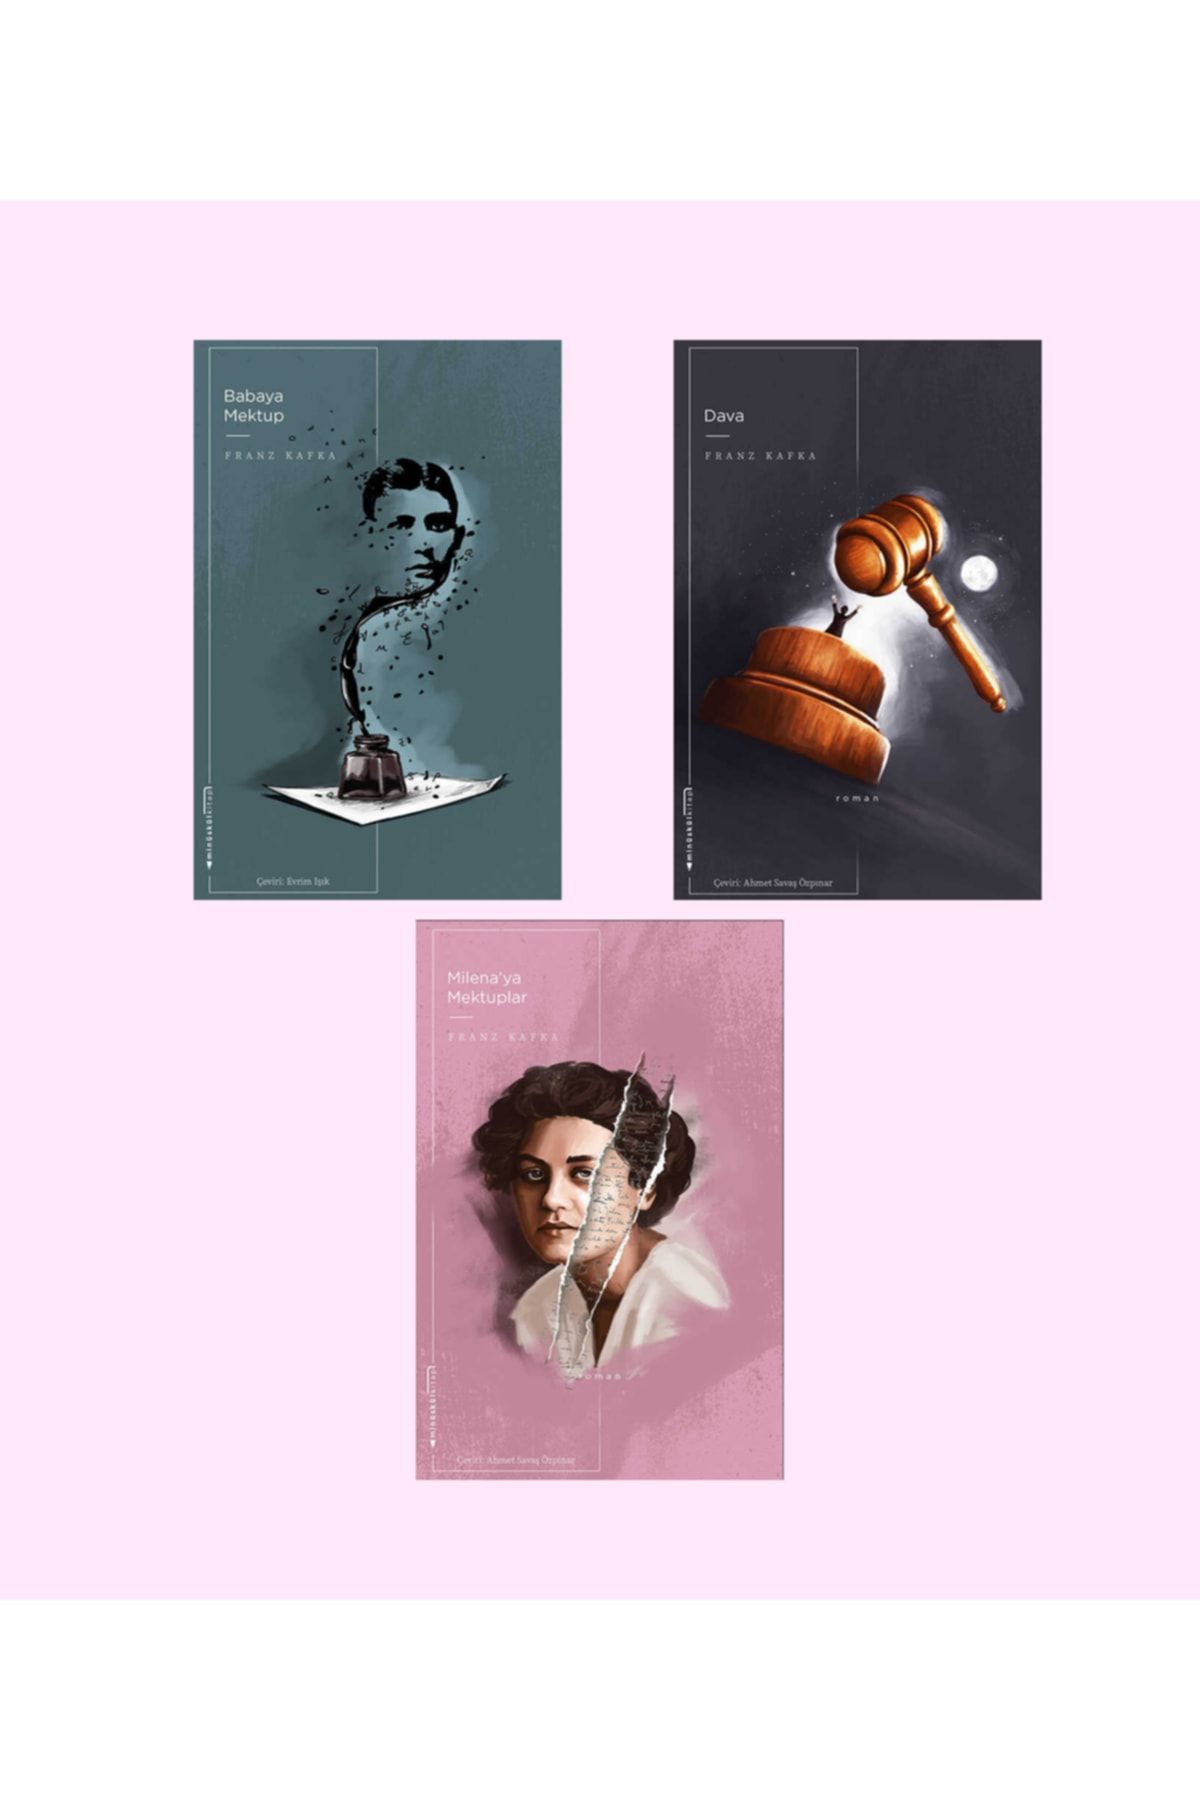 Minüskülkitap 3 Kitap / Franz Kafka Seti / Milena'ya Mektuplar - Babaya Mektup - Dava